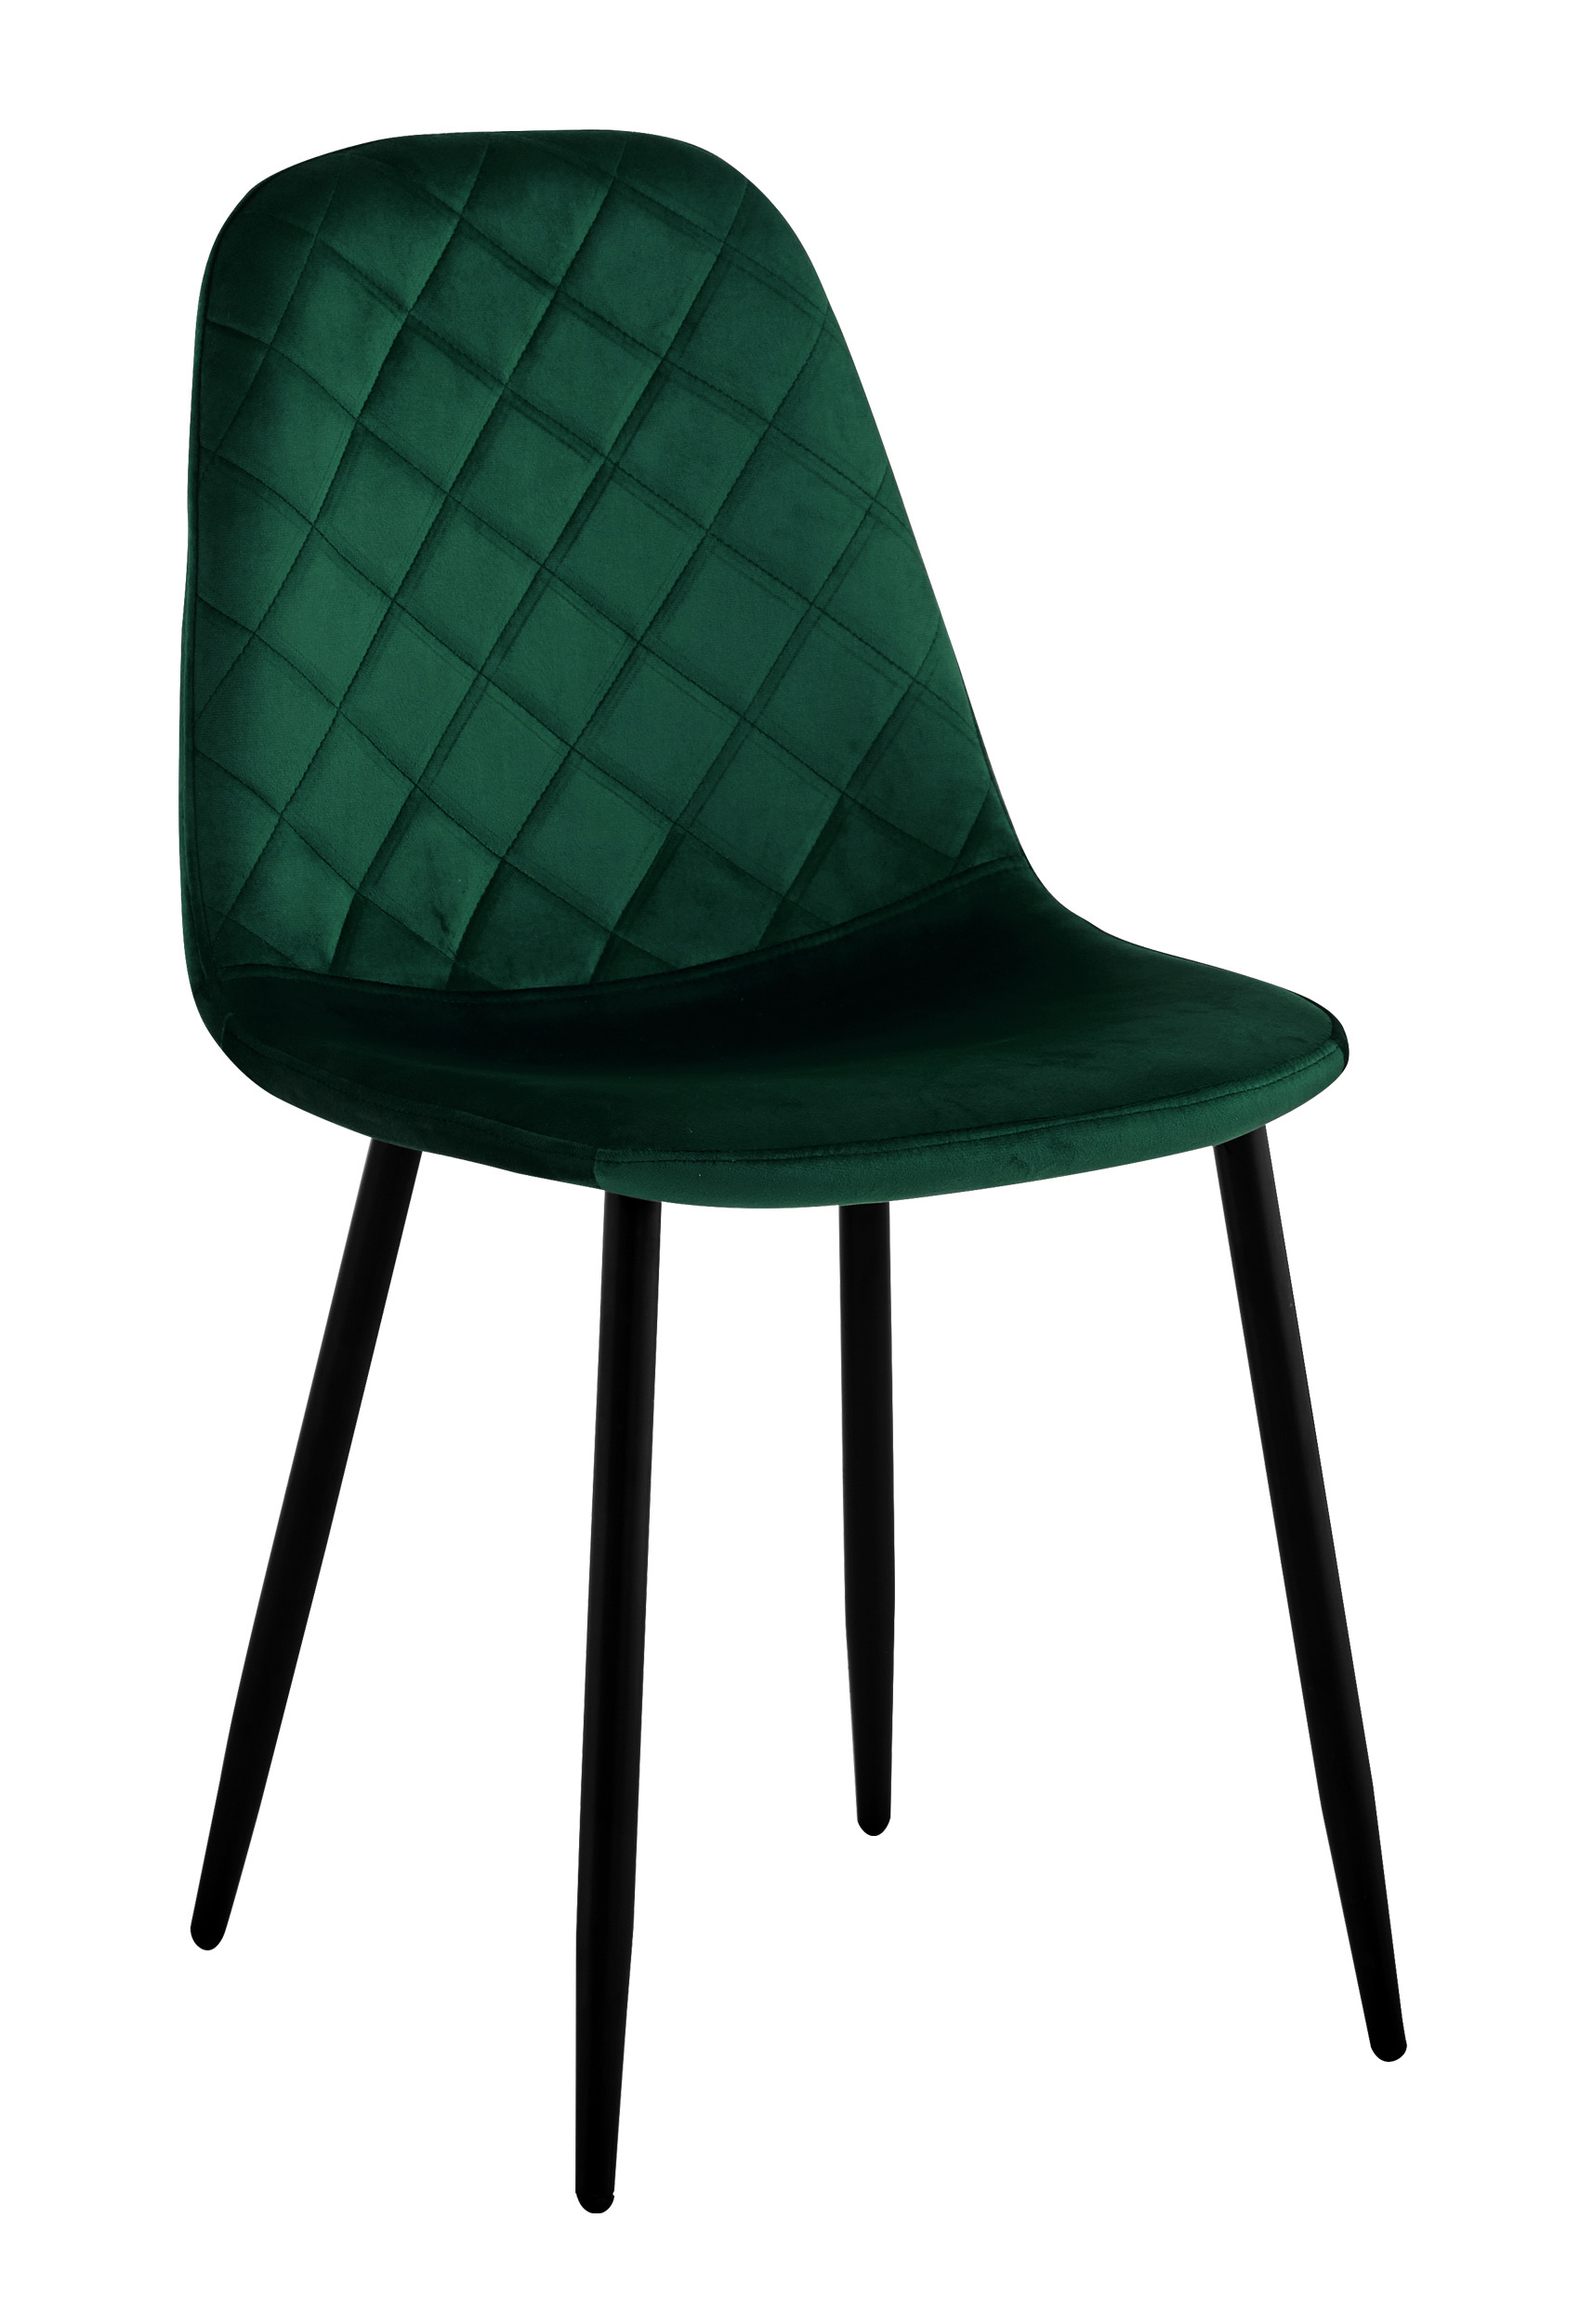 Krzesło aksamitne ORLANDO Velvet Ciemnozielone